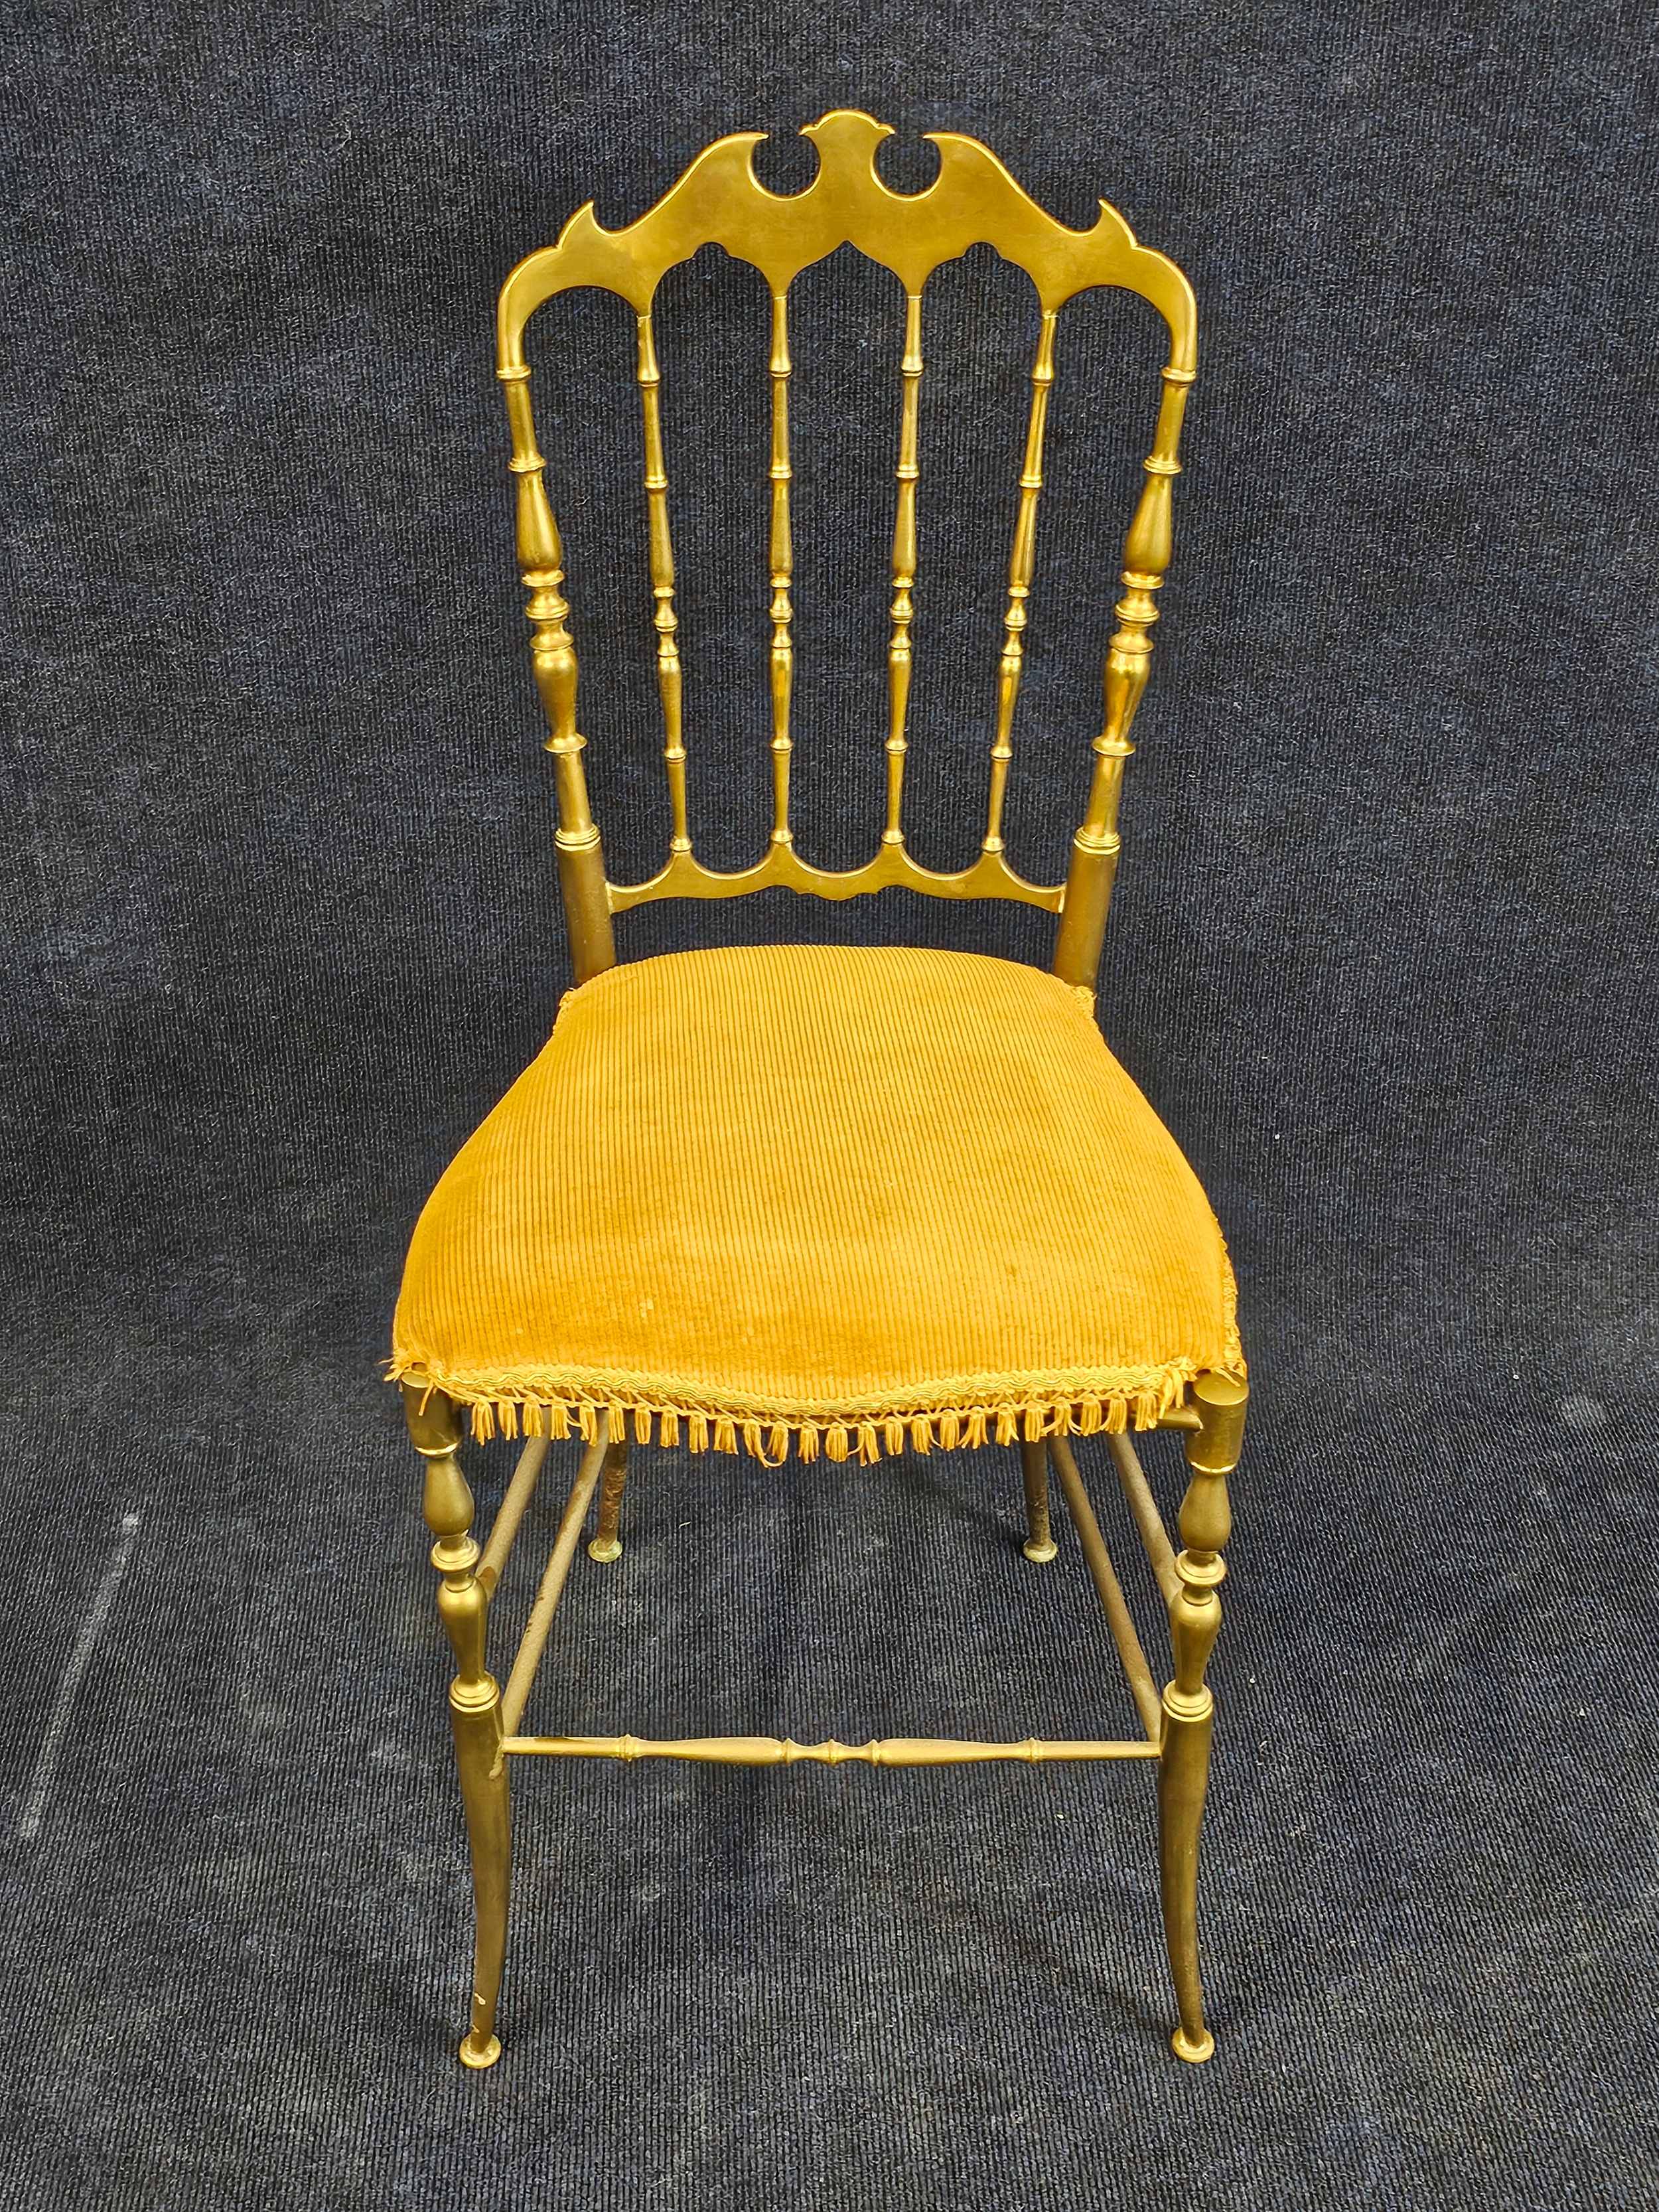 A brass salon chair - Image 6 of 8